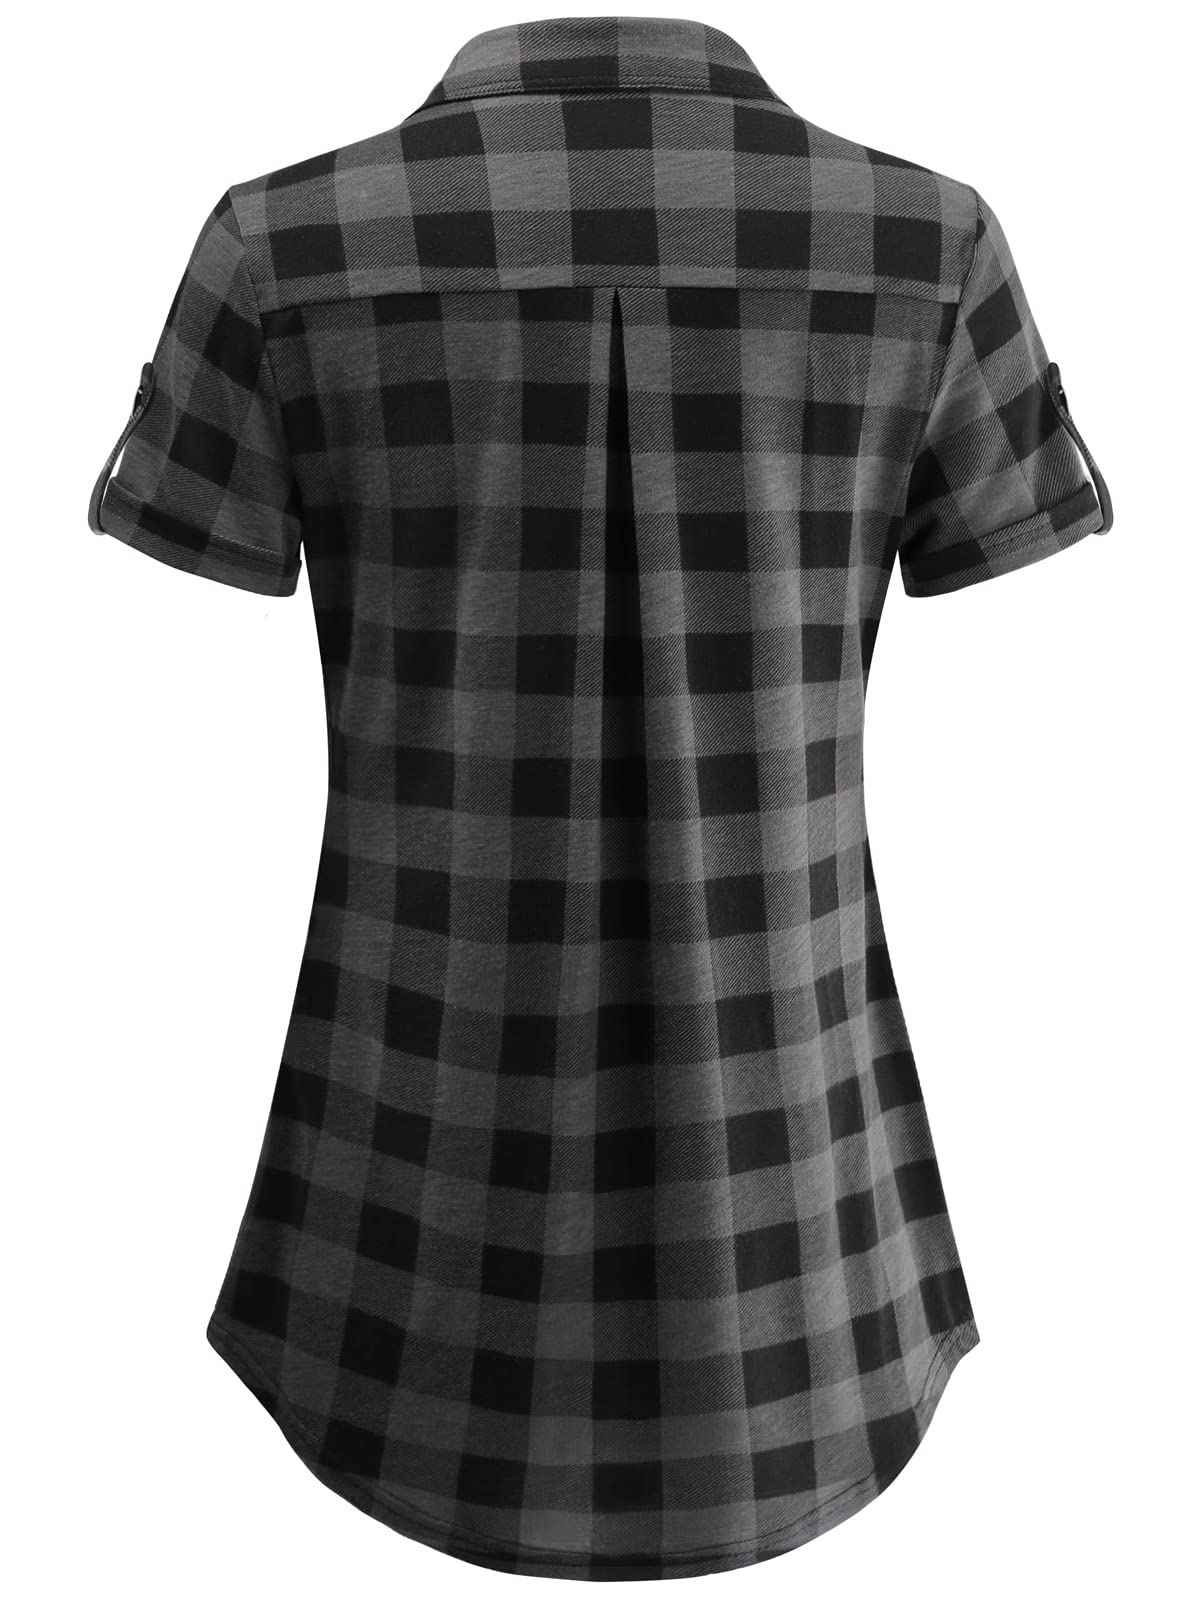 DJT Roll Up  Collared Short Sleeve Black Plaid Women’s Button Down Plaid Shirt